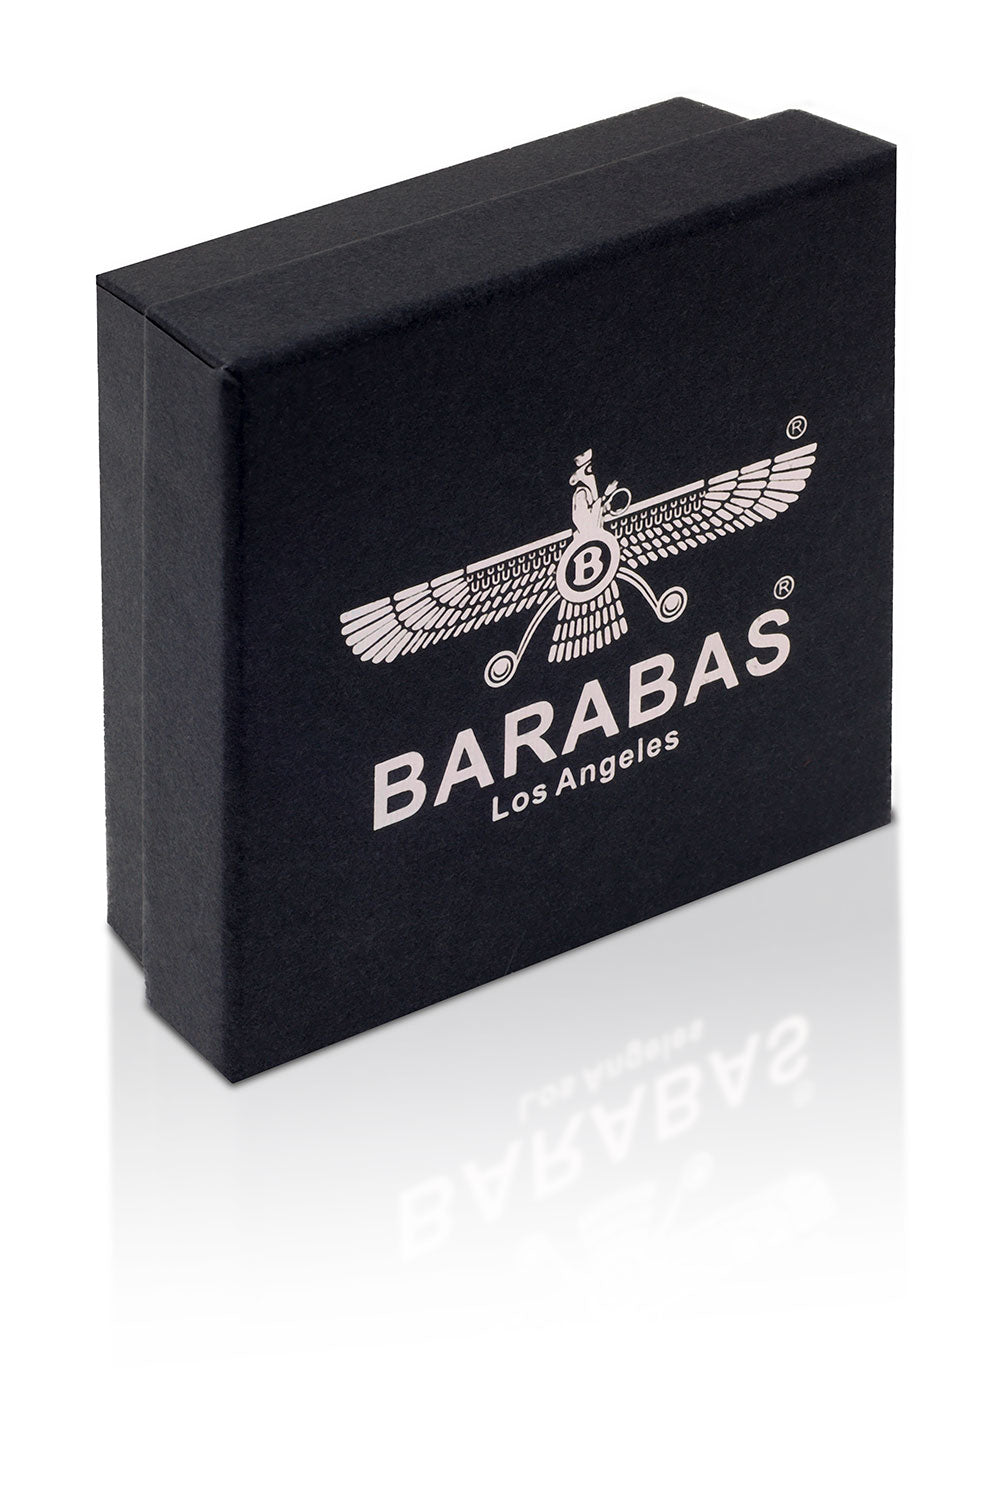 Barabas Unisex Obsidian Beads and Chains Bangles Bracelets 4BB05 Black